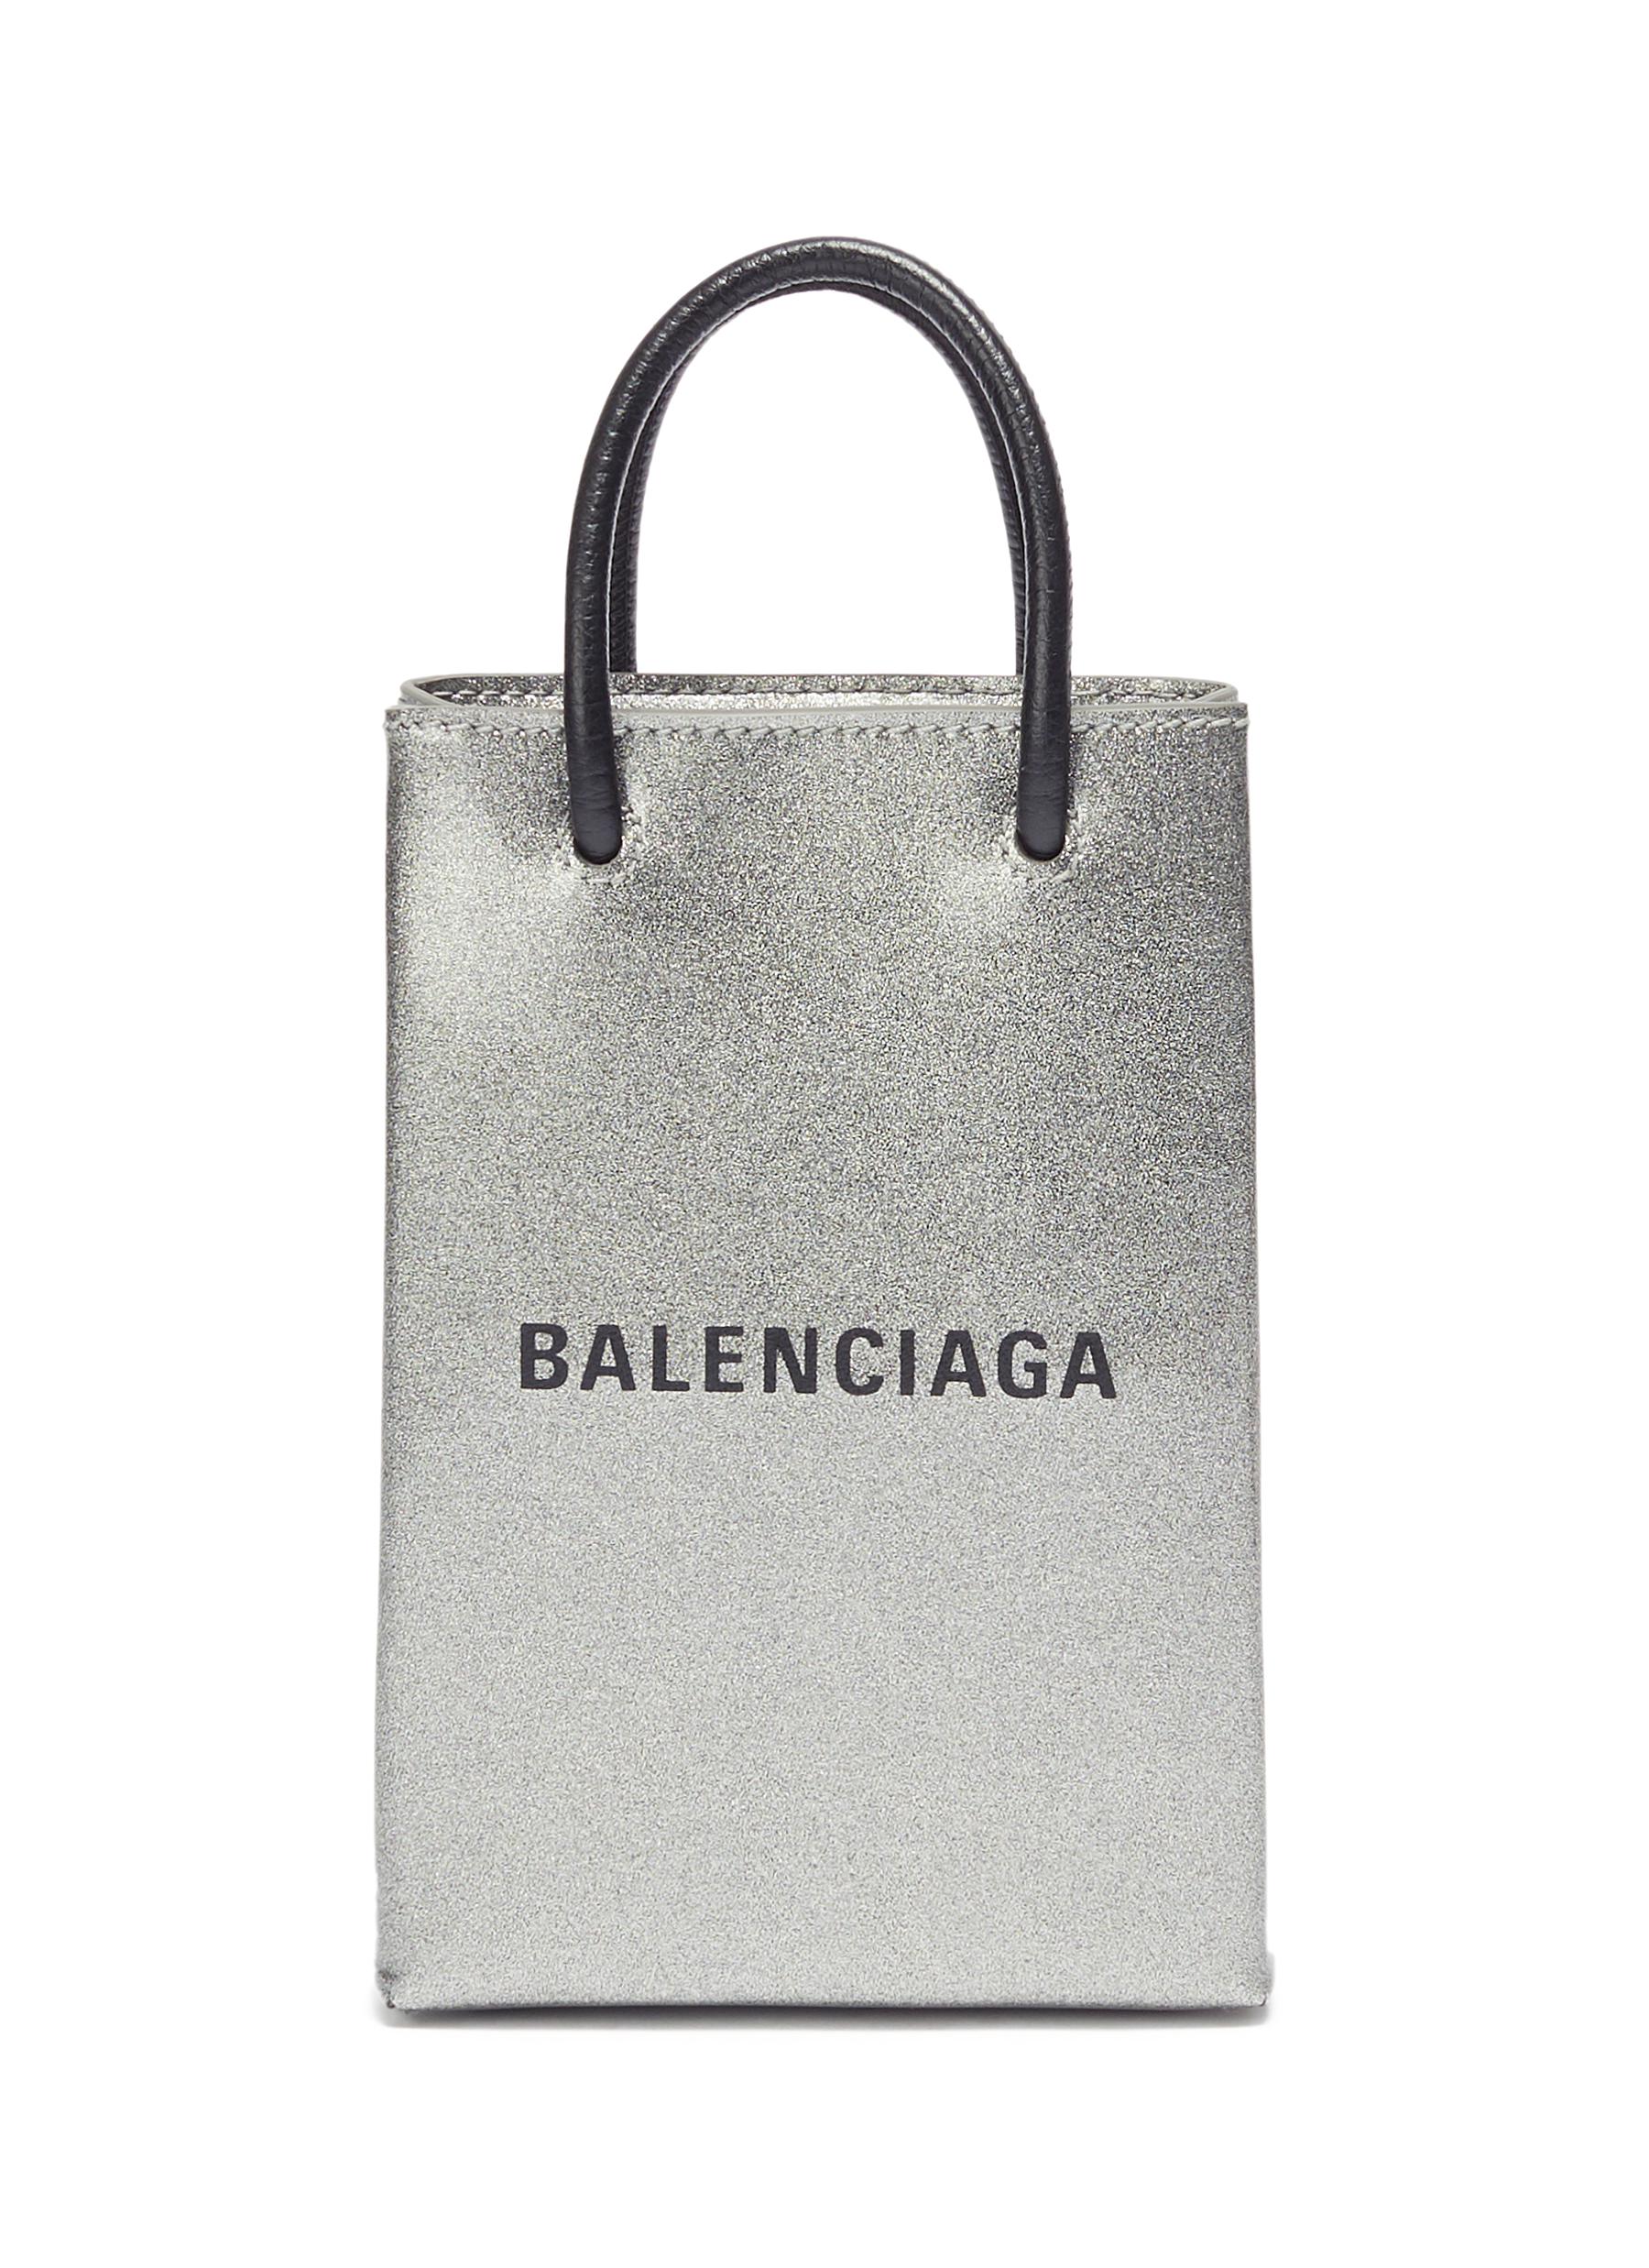 Balenciaga Logo Print Leather Tote In Metallic